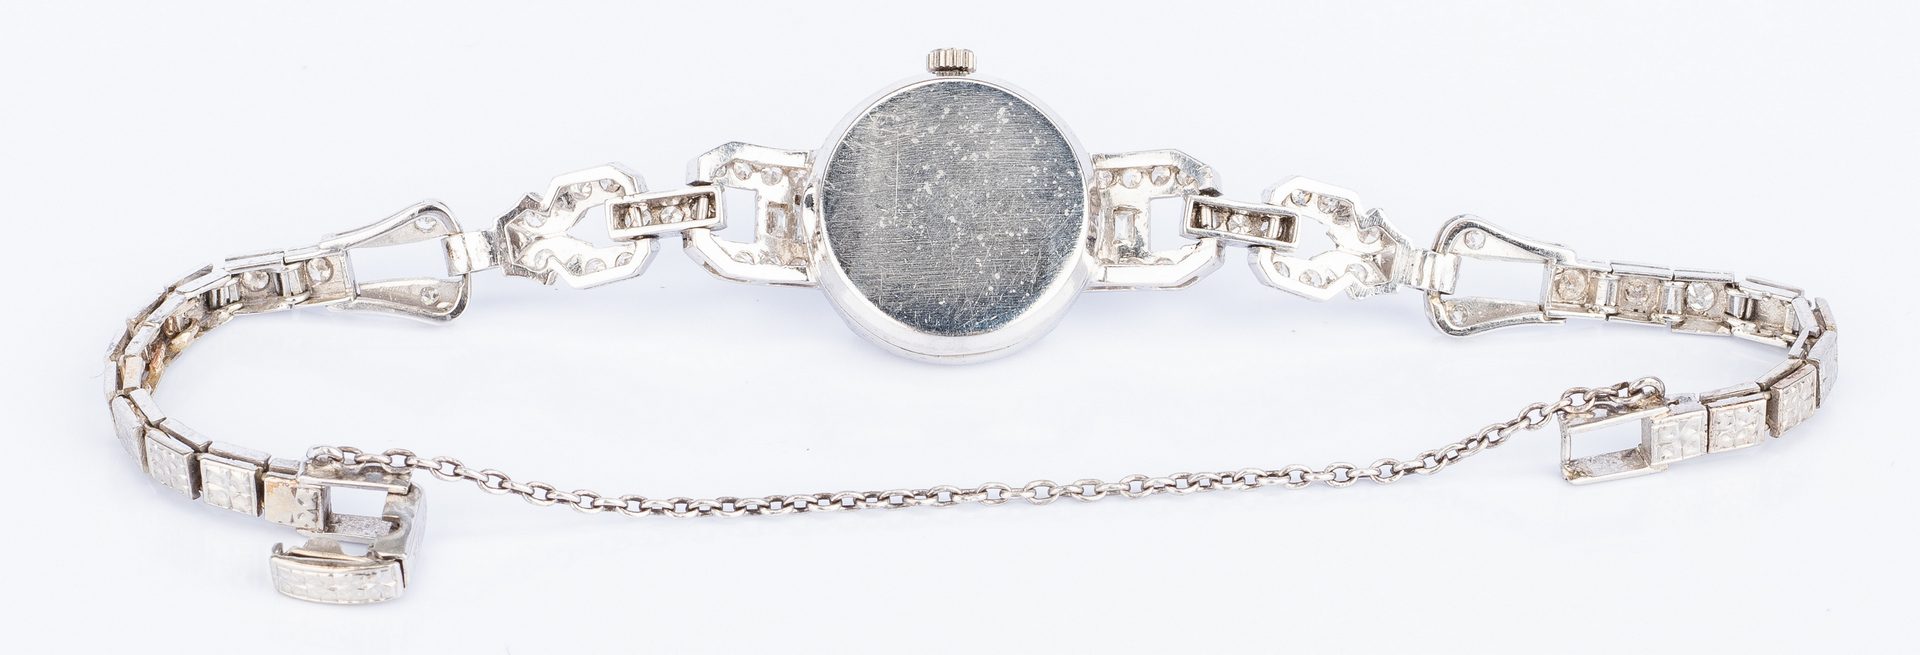 Lot 46: Art Deco Waltham Diamond Watch